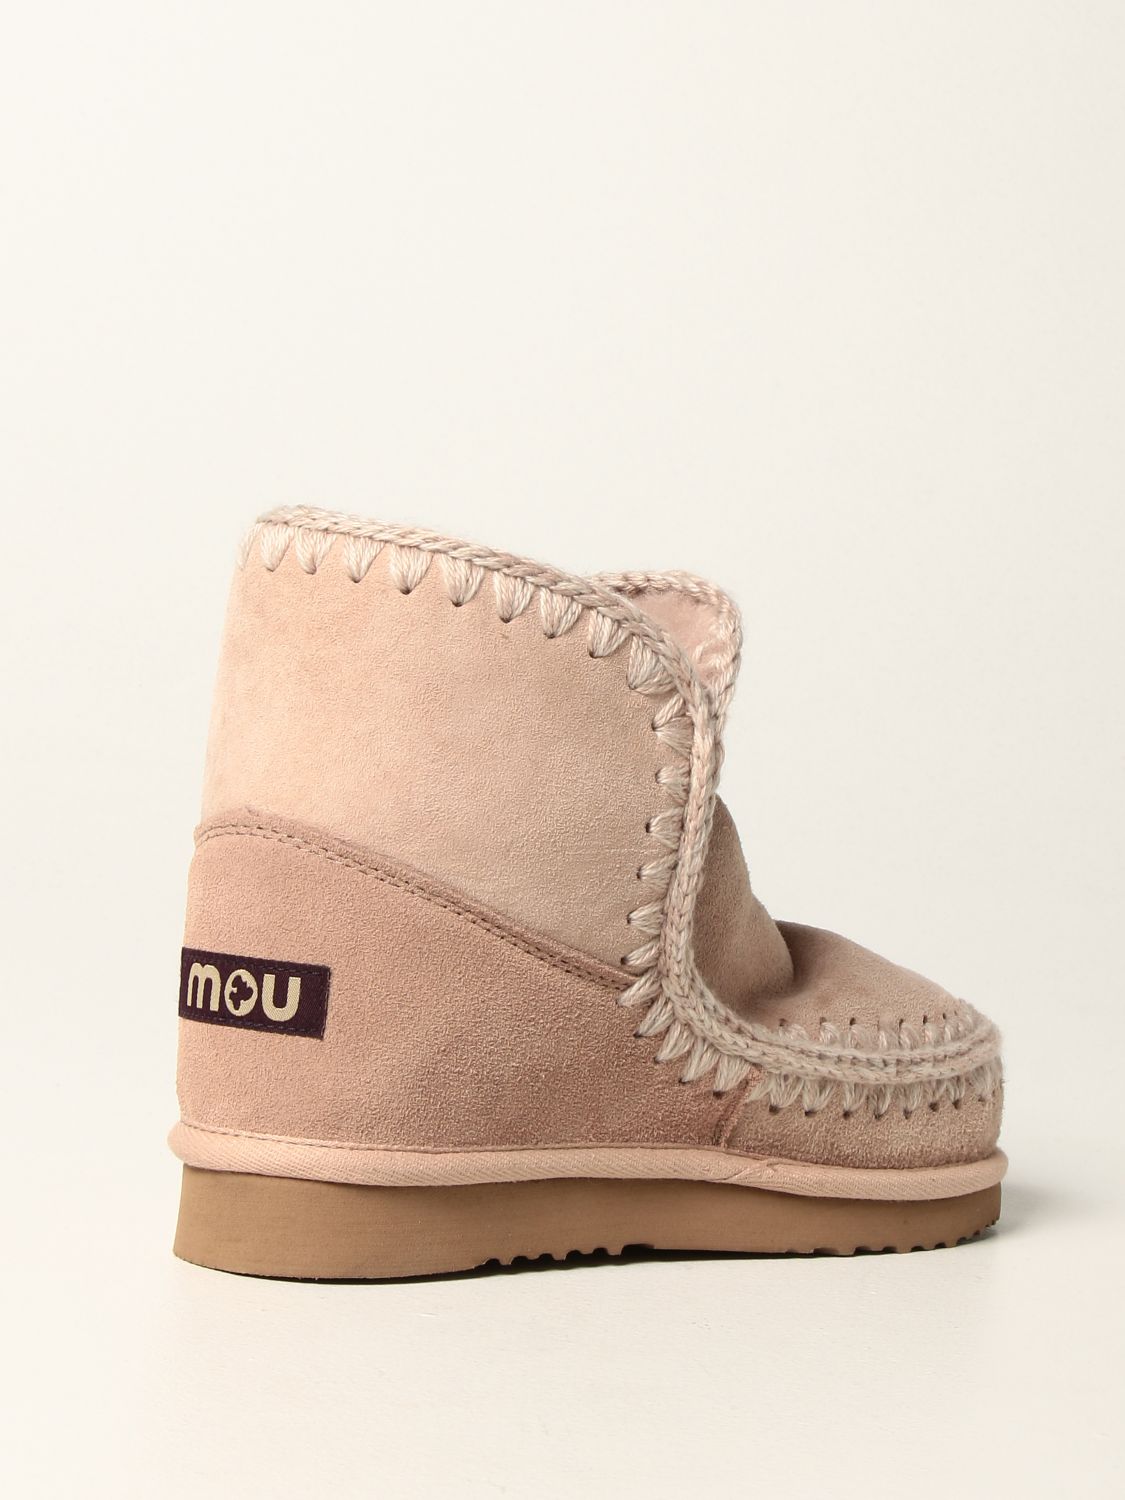 Flat ankle boots Mou: Shoes women Mou blush pink 3